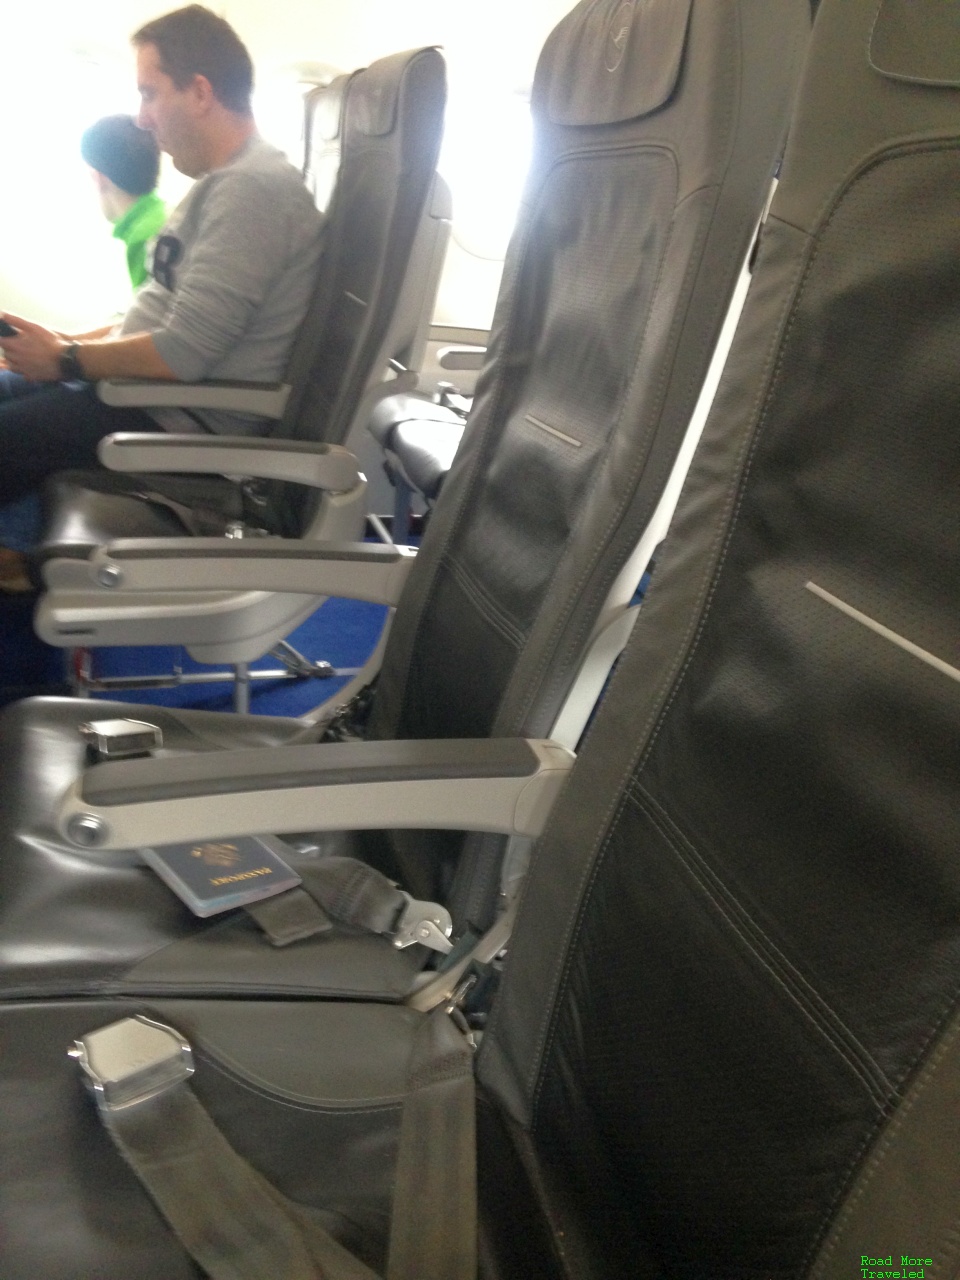 Lufthansa A320 Economy Class - slimline seats